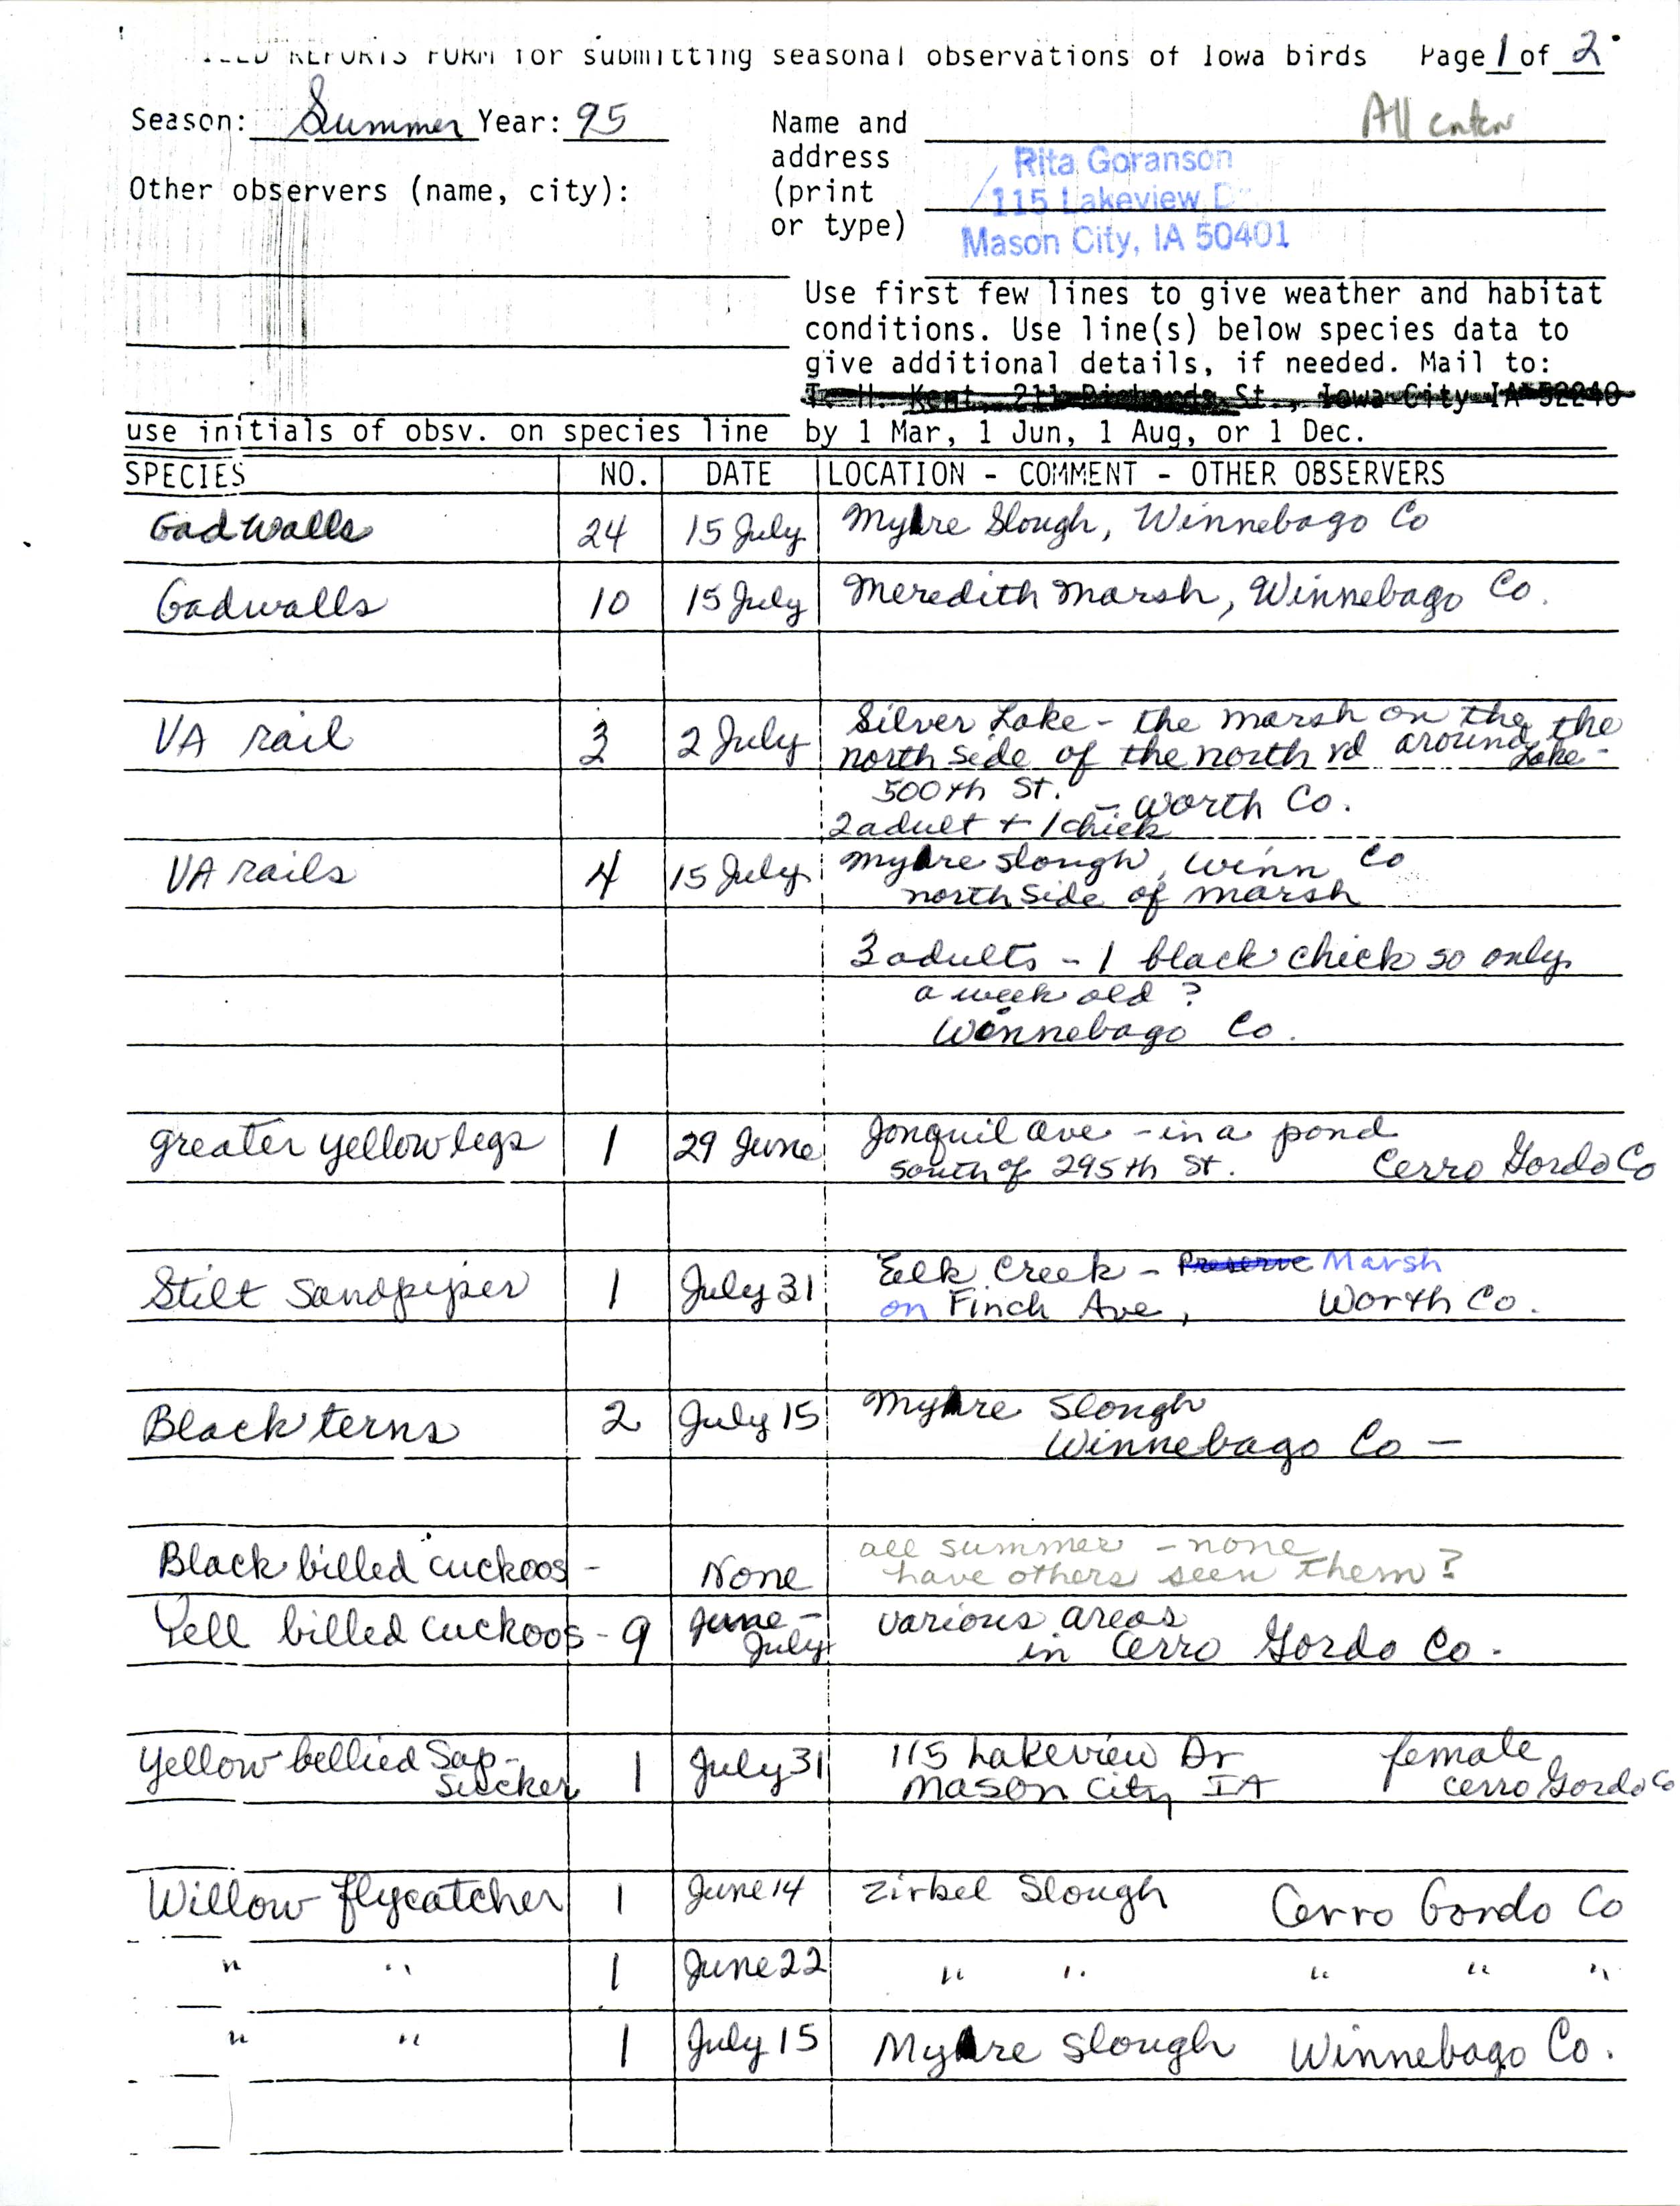 Field reports form for submitting seasonal observations of Iowa birds, summer 1995, Rita Goranson